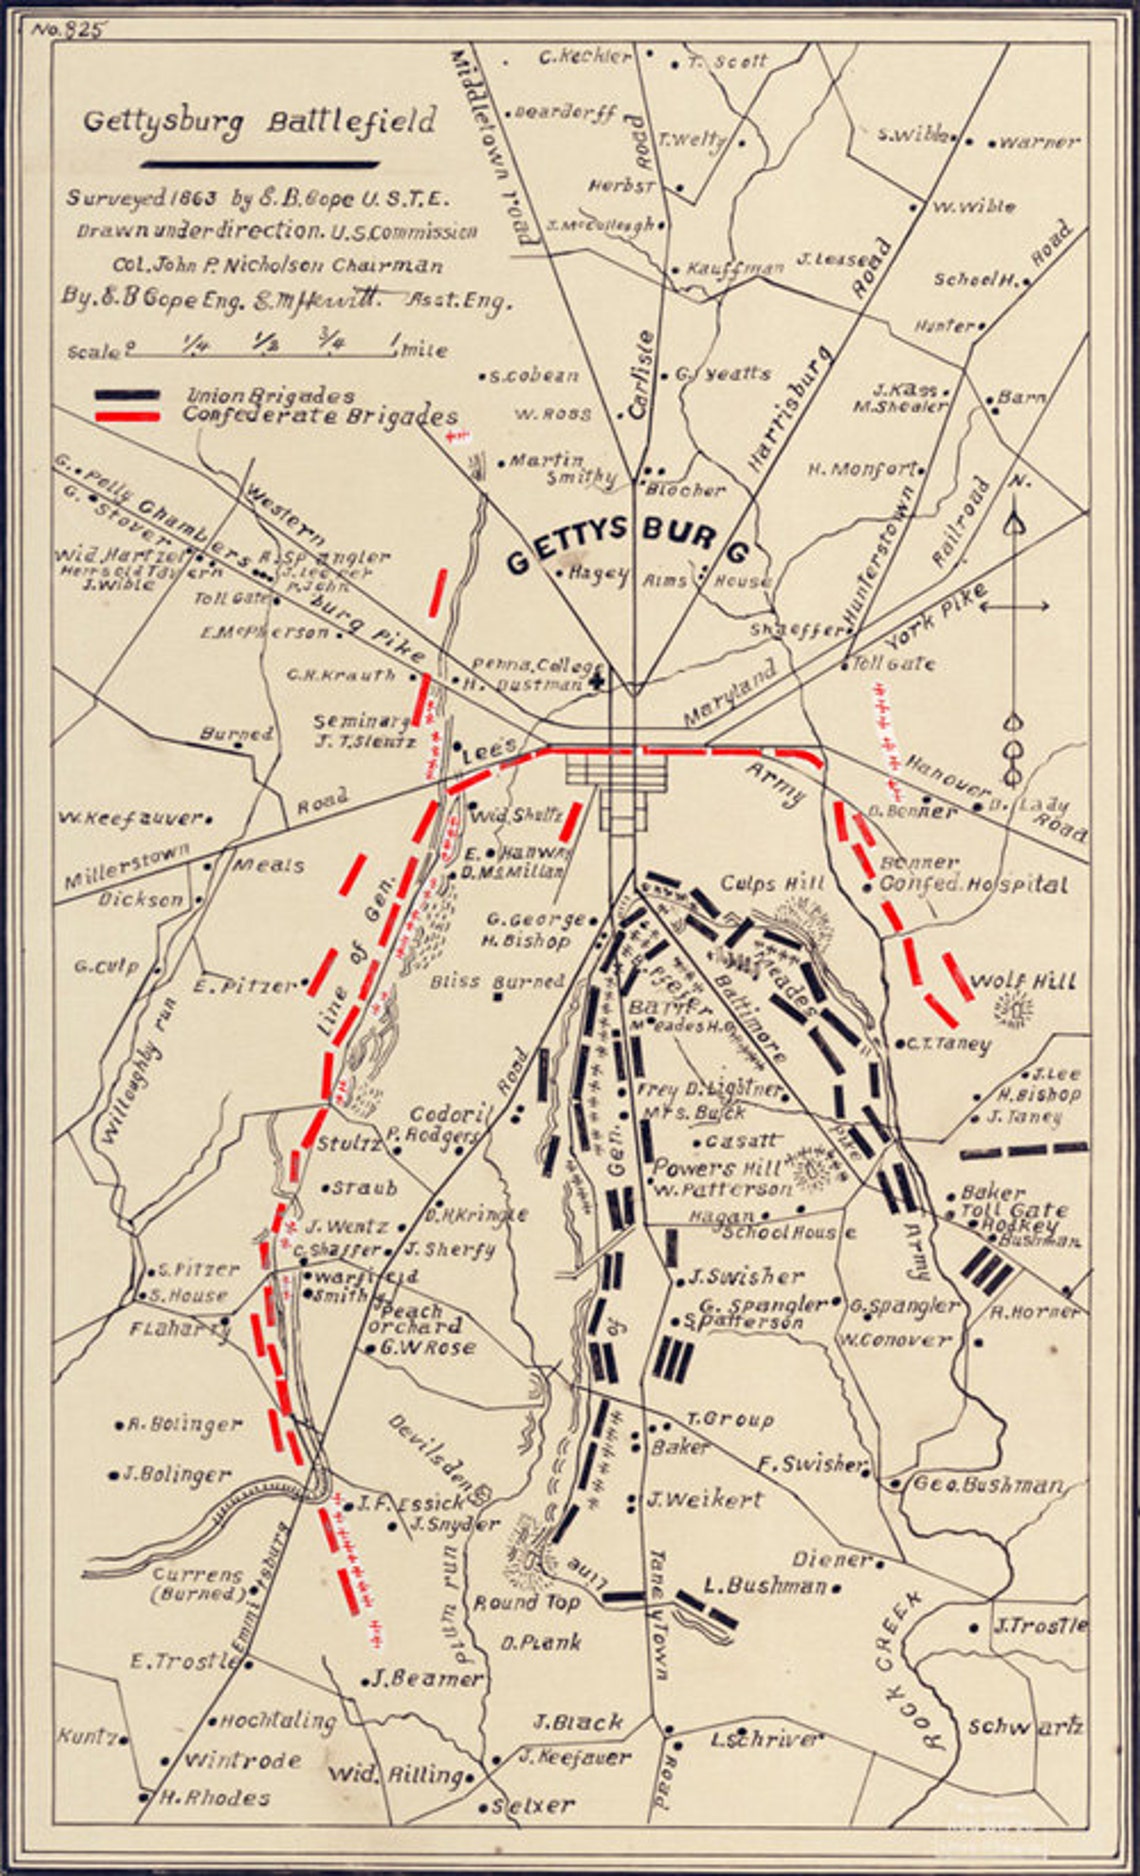 1863-map-of-gettysburg-civil-war-battlefield-adams-county-etsy